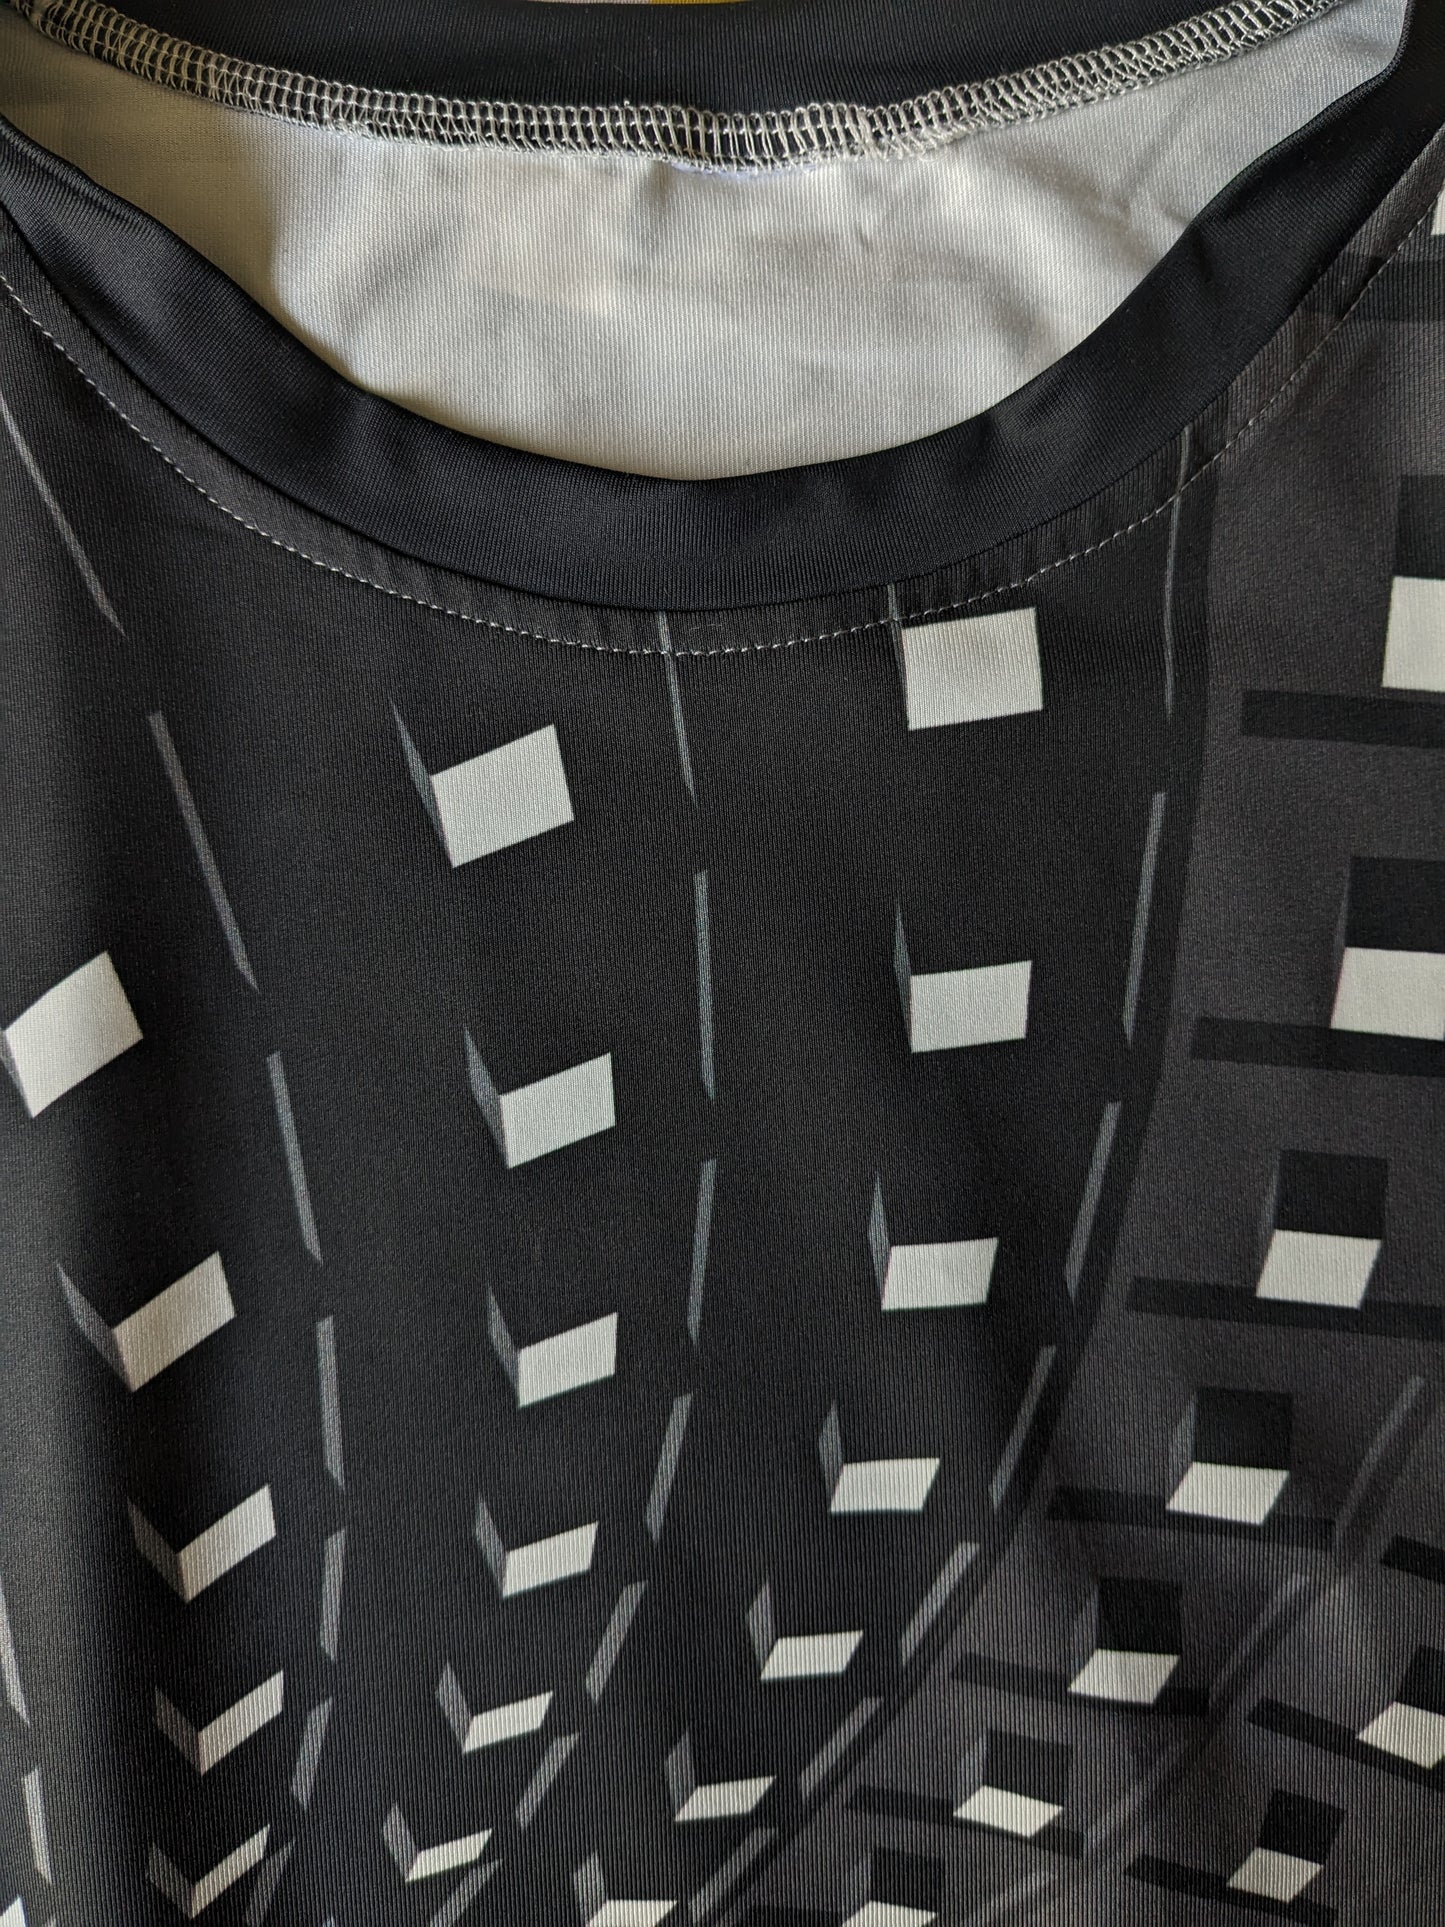 Retro Gemetric print shirt. Grijs Zwart Wit gekleurd. Maat L. stretch.